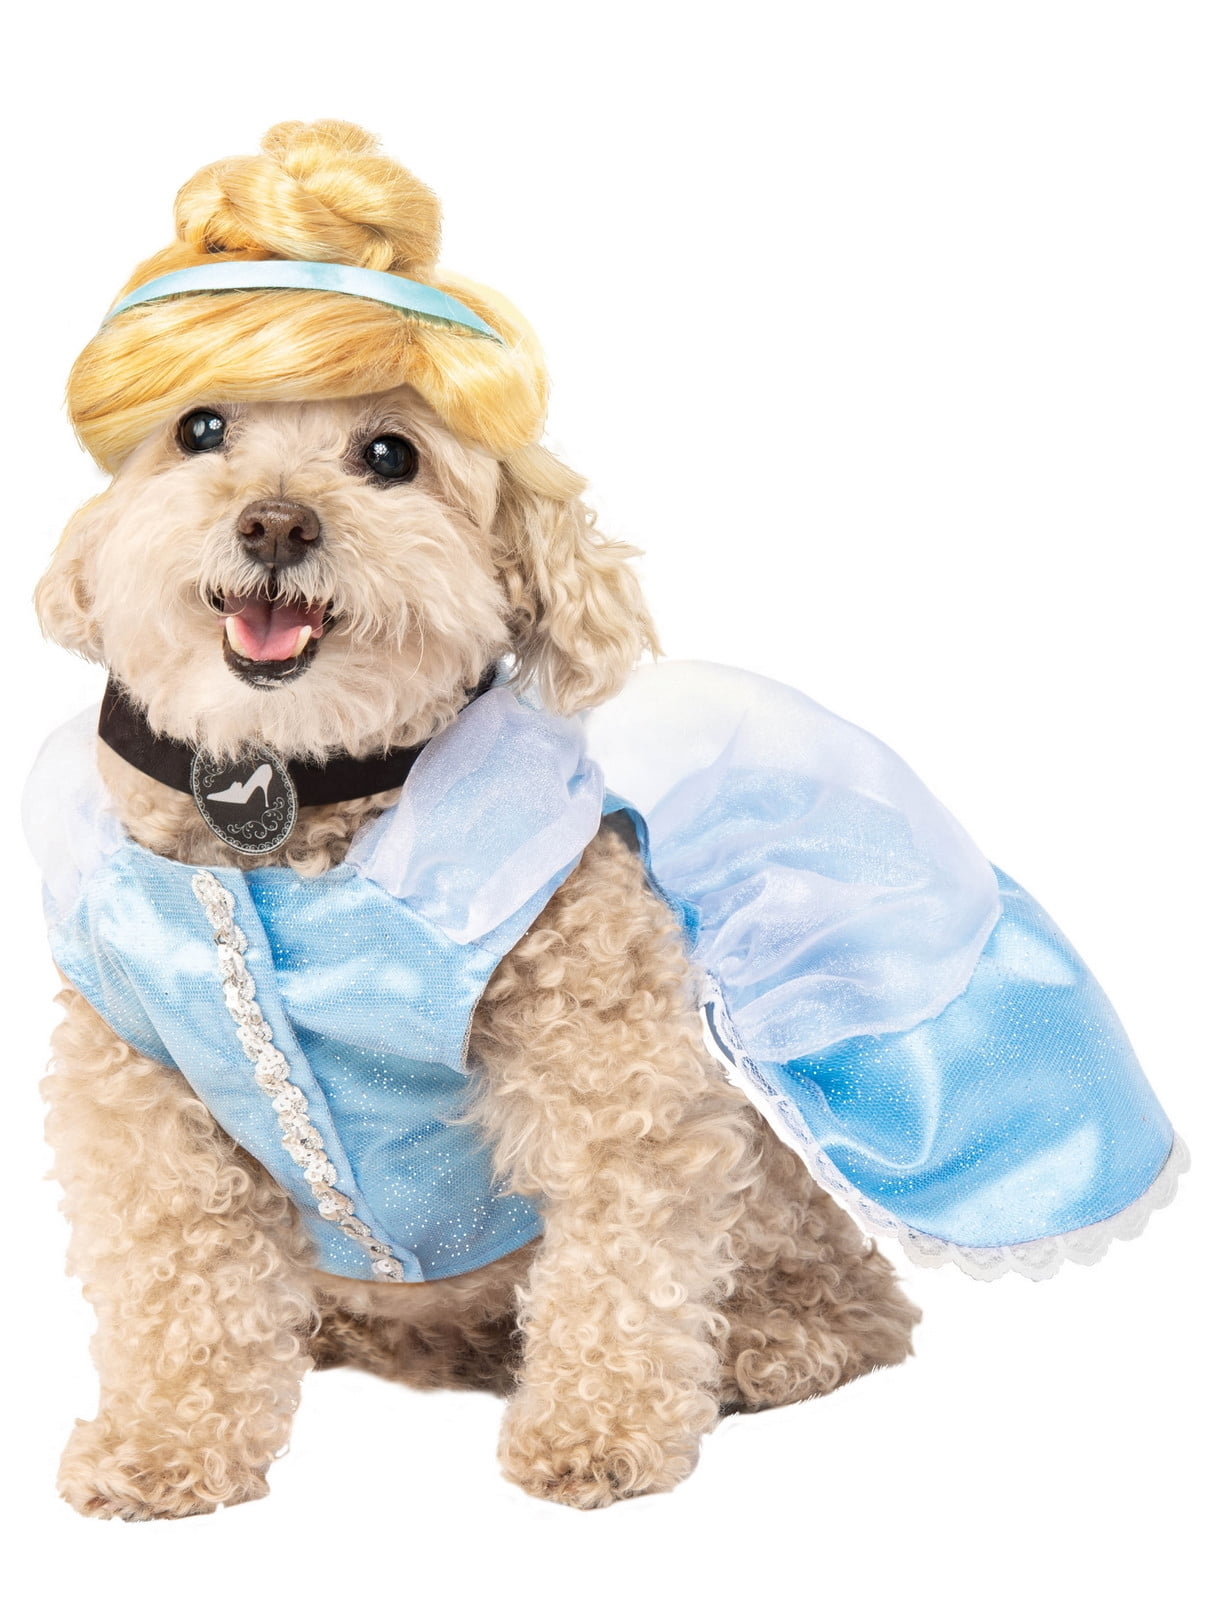 the dog dressed as cinderella